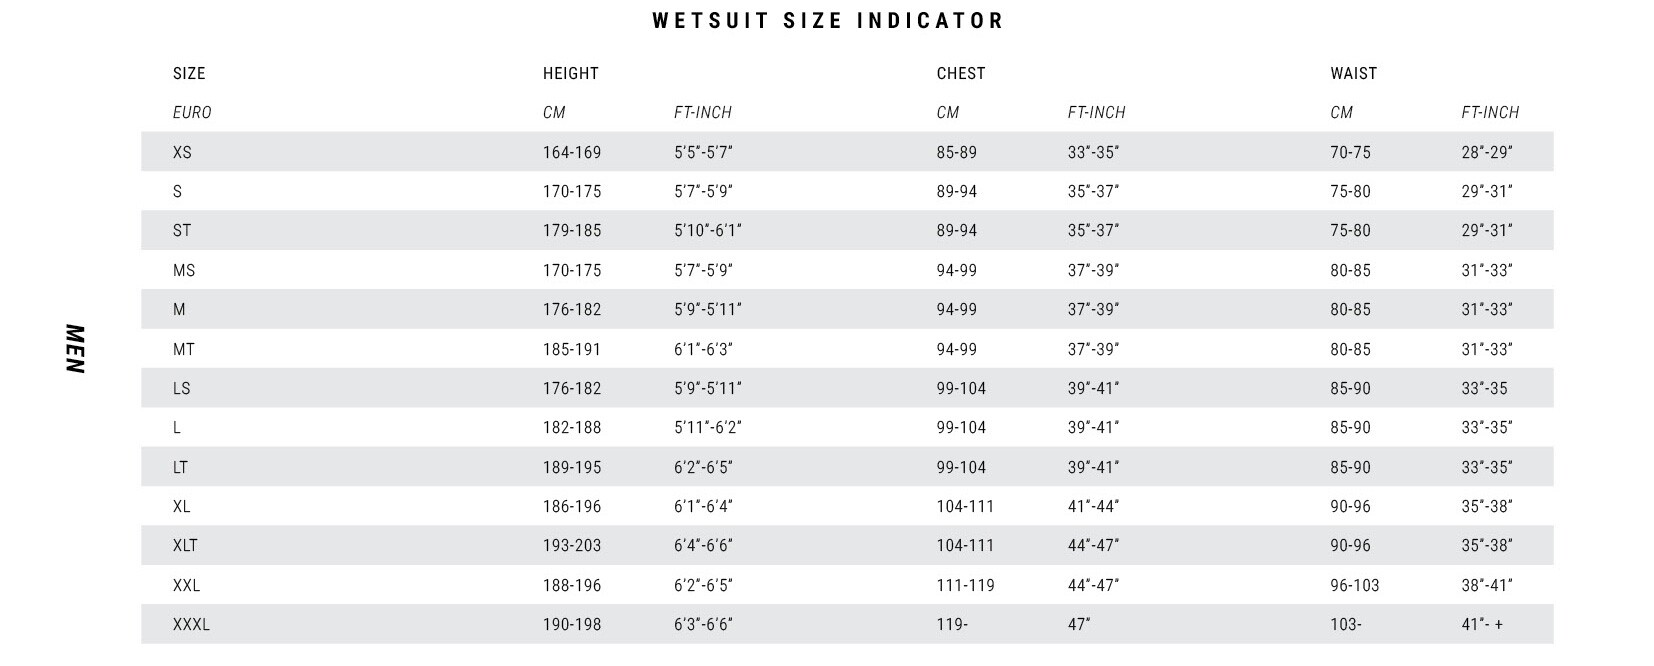 Mystic Brand 3/2 back-zip longarm shorty wetsuit